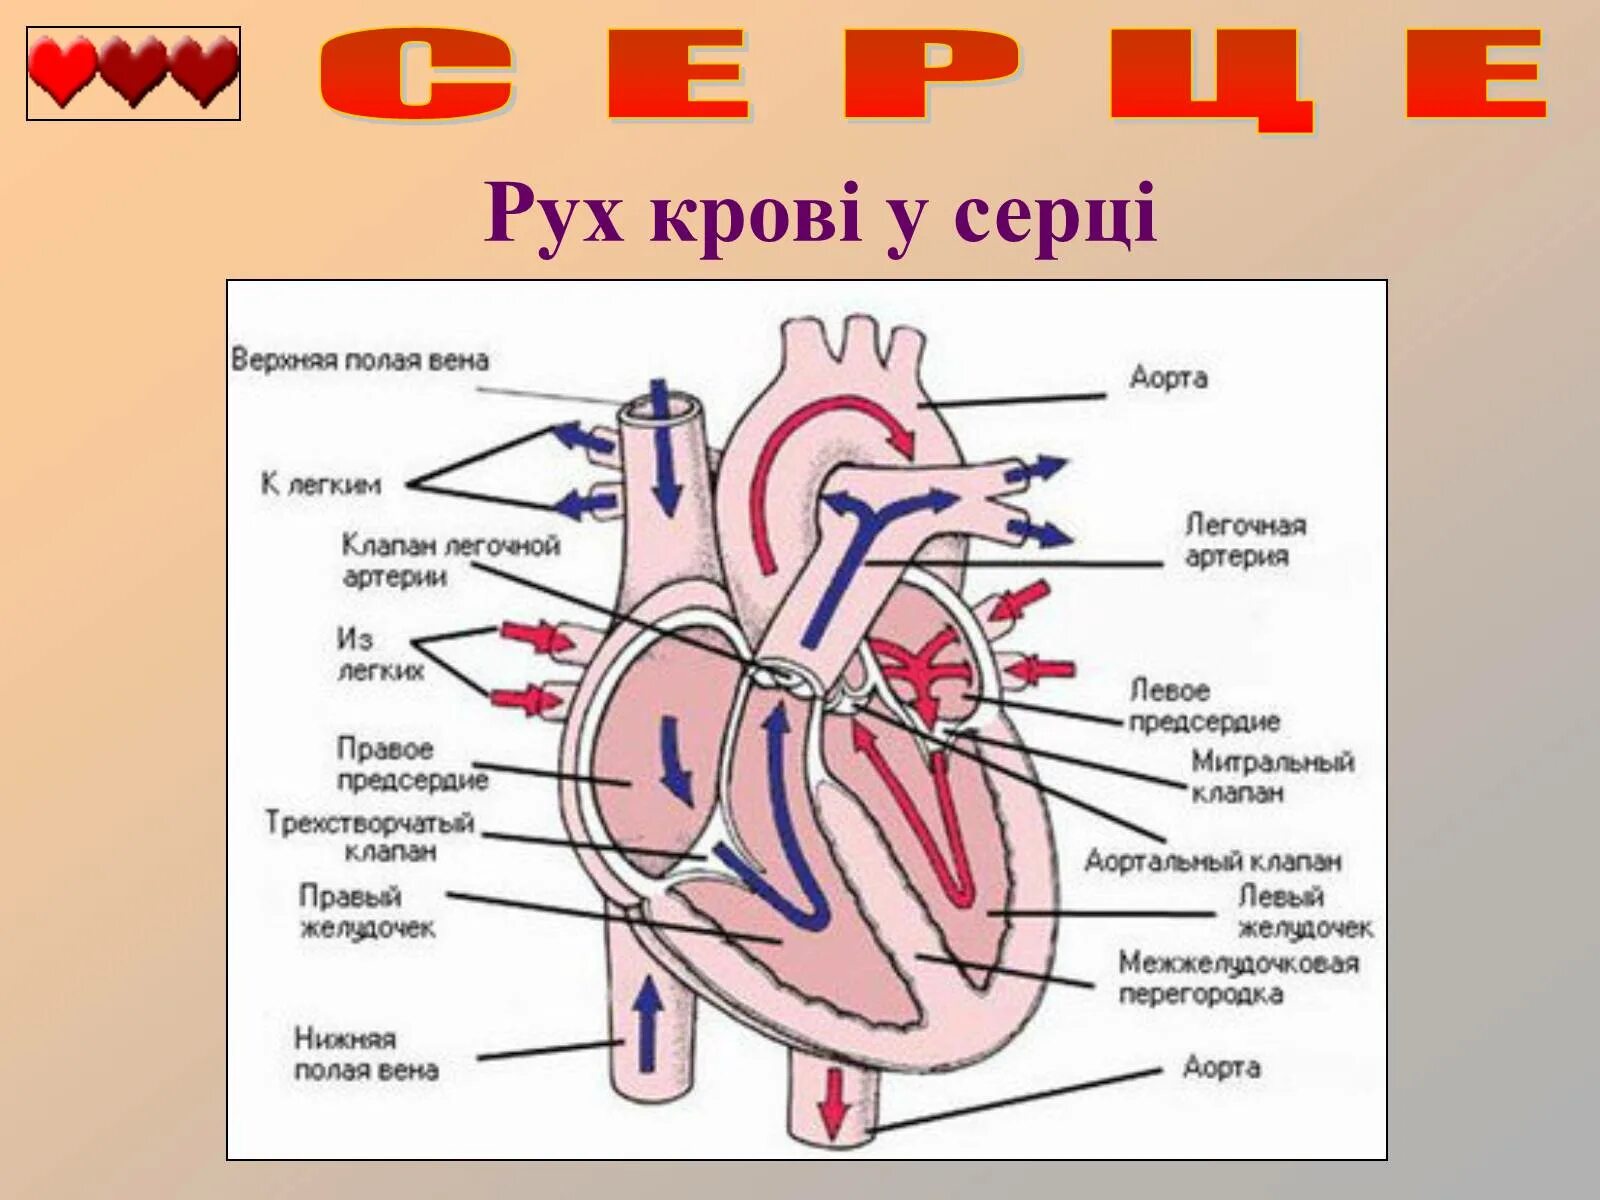 Срез сердца человека. Строение сердца человека схема клапаны. Строение сердца с клапанами схема. Схема внутреннего строения сердца. Строение сердца рисунок.